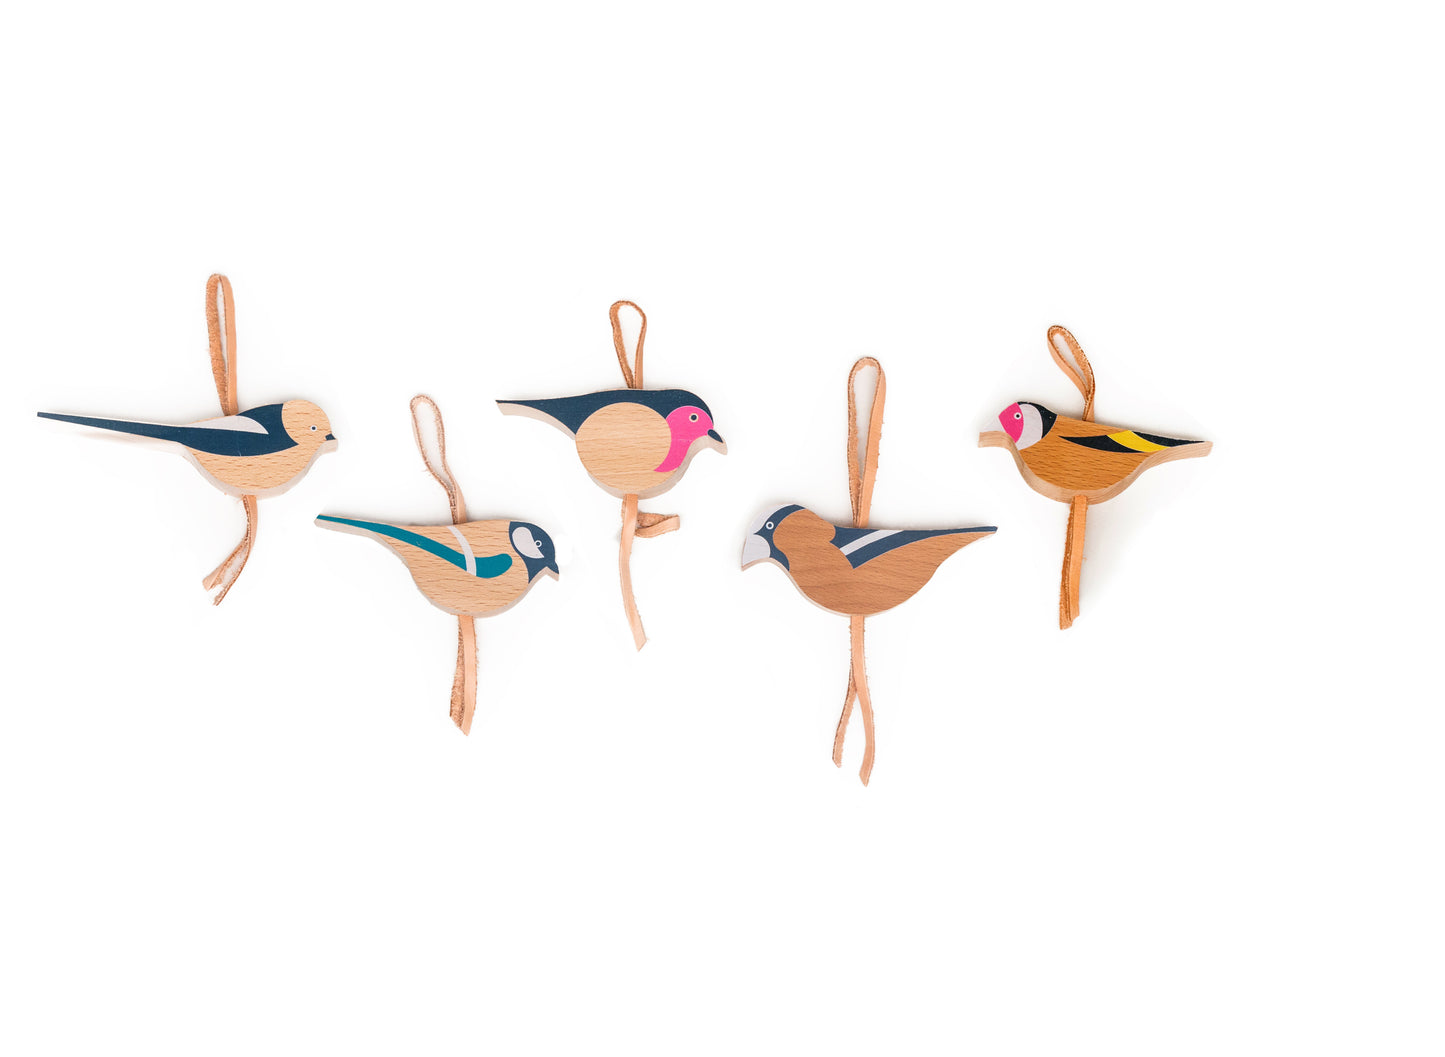 Eperfa - Hillside birds ornaments - Hawfinch